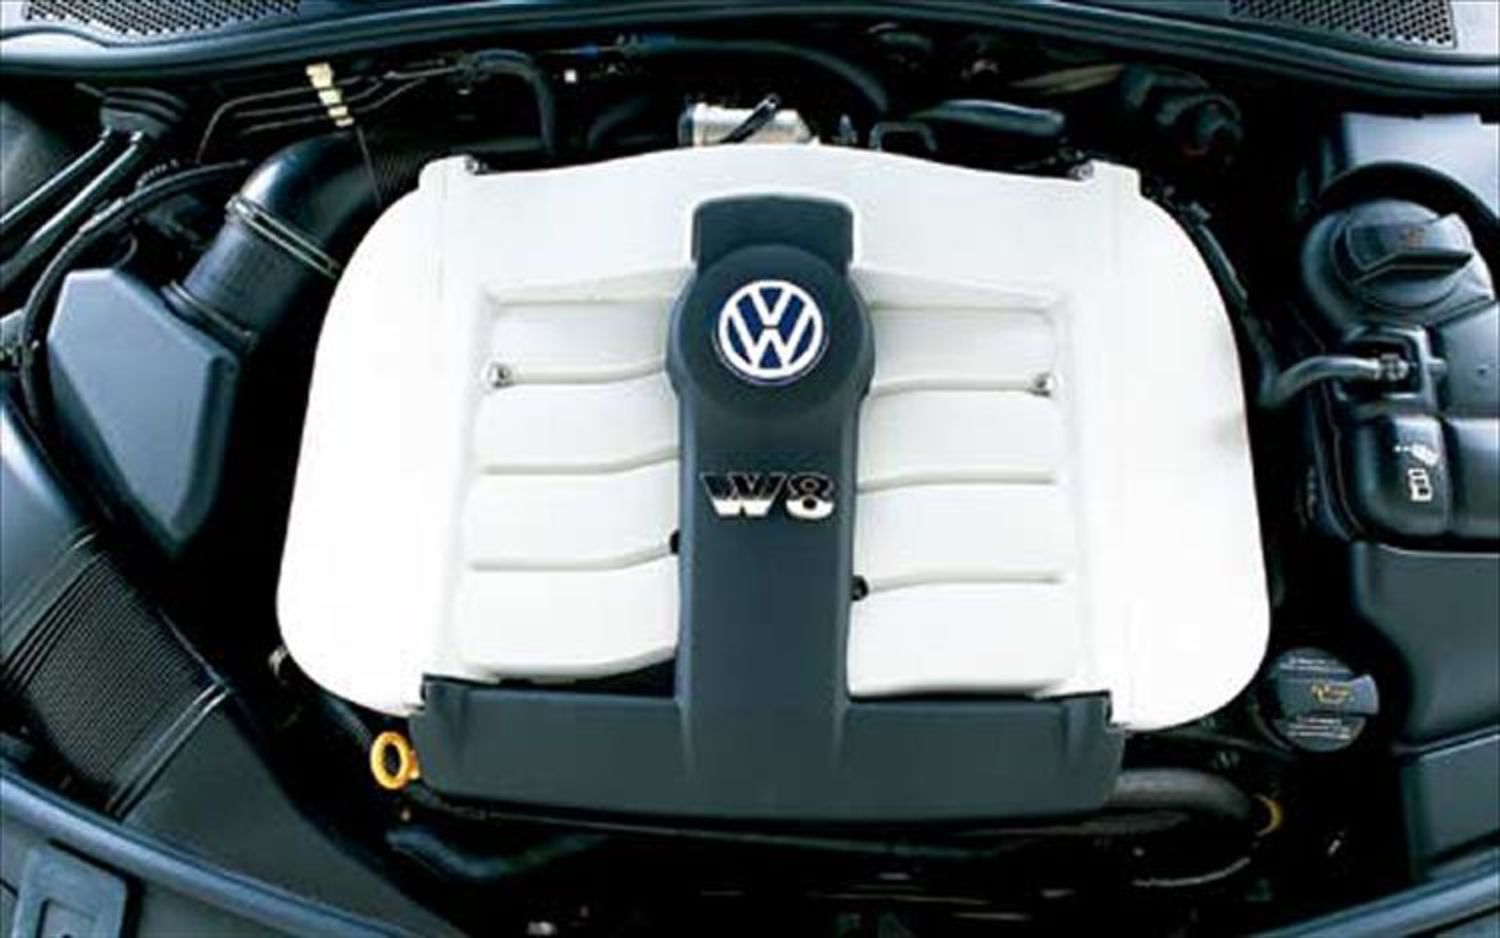 Volkswagen Passat W8 4 Motion. View Download Wallpaper. 750x469. Comments